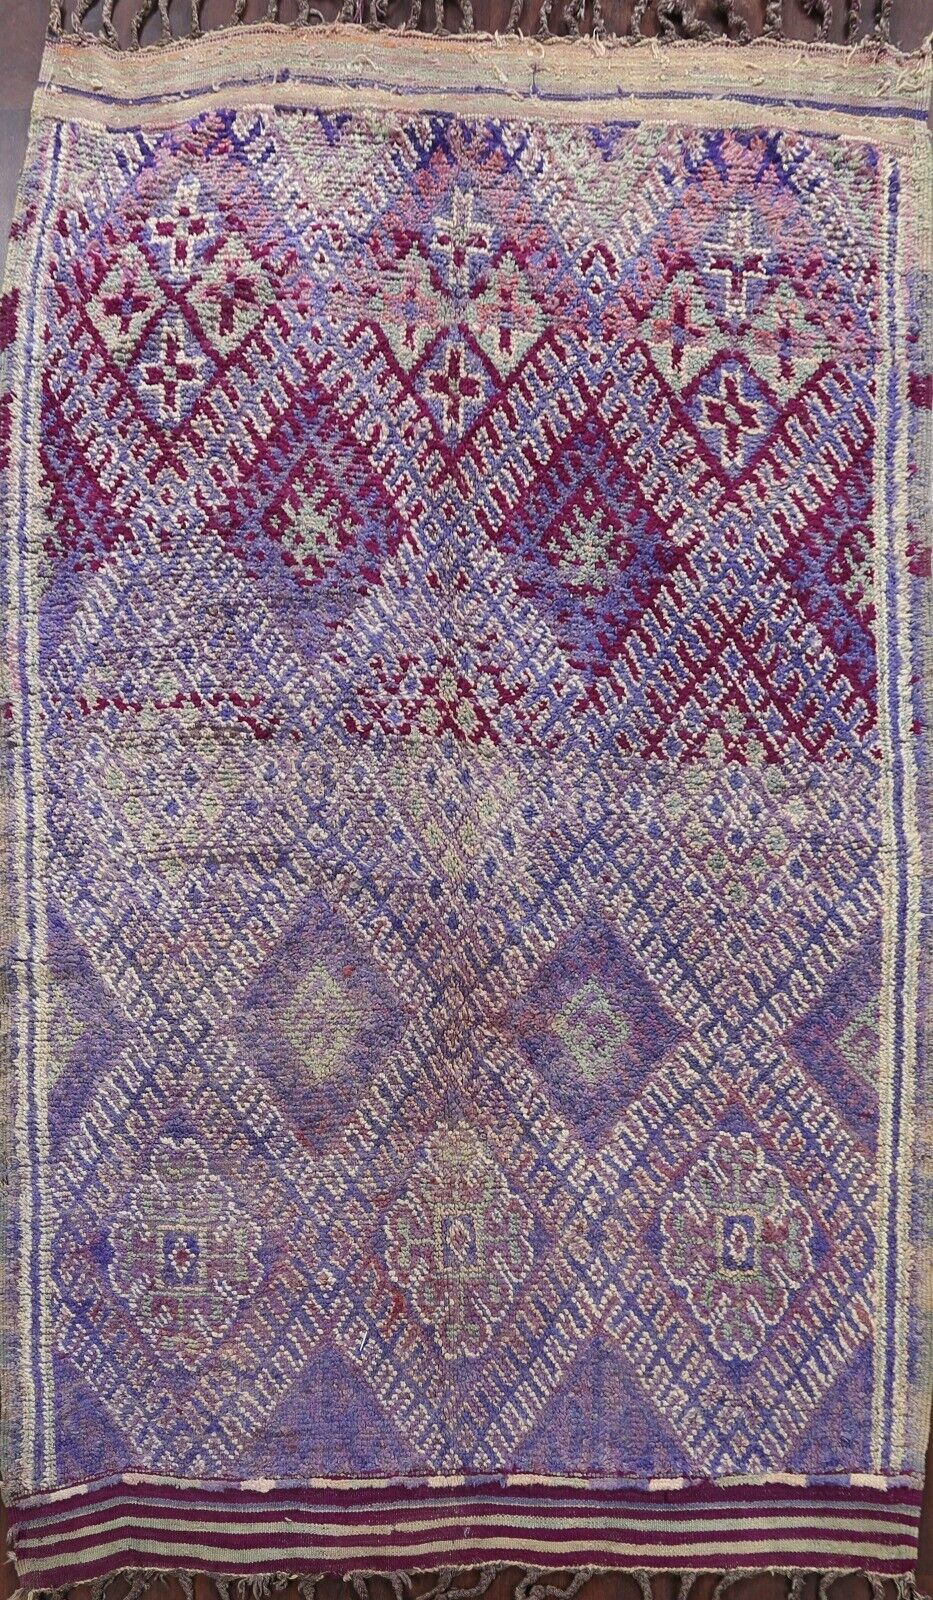 Antique Vegetable Dye Authentic Moroccan Berber Handmade Oriental Area Rug 7'x9'